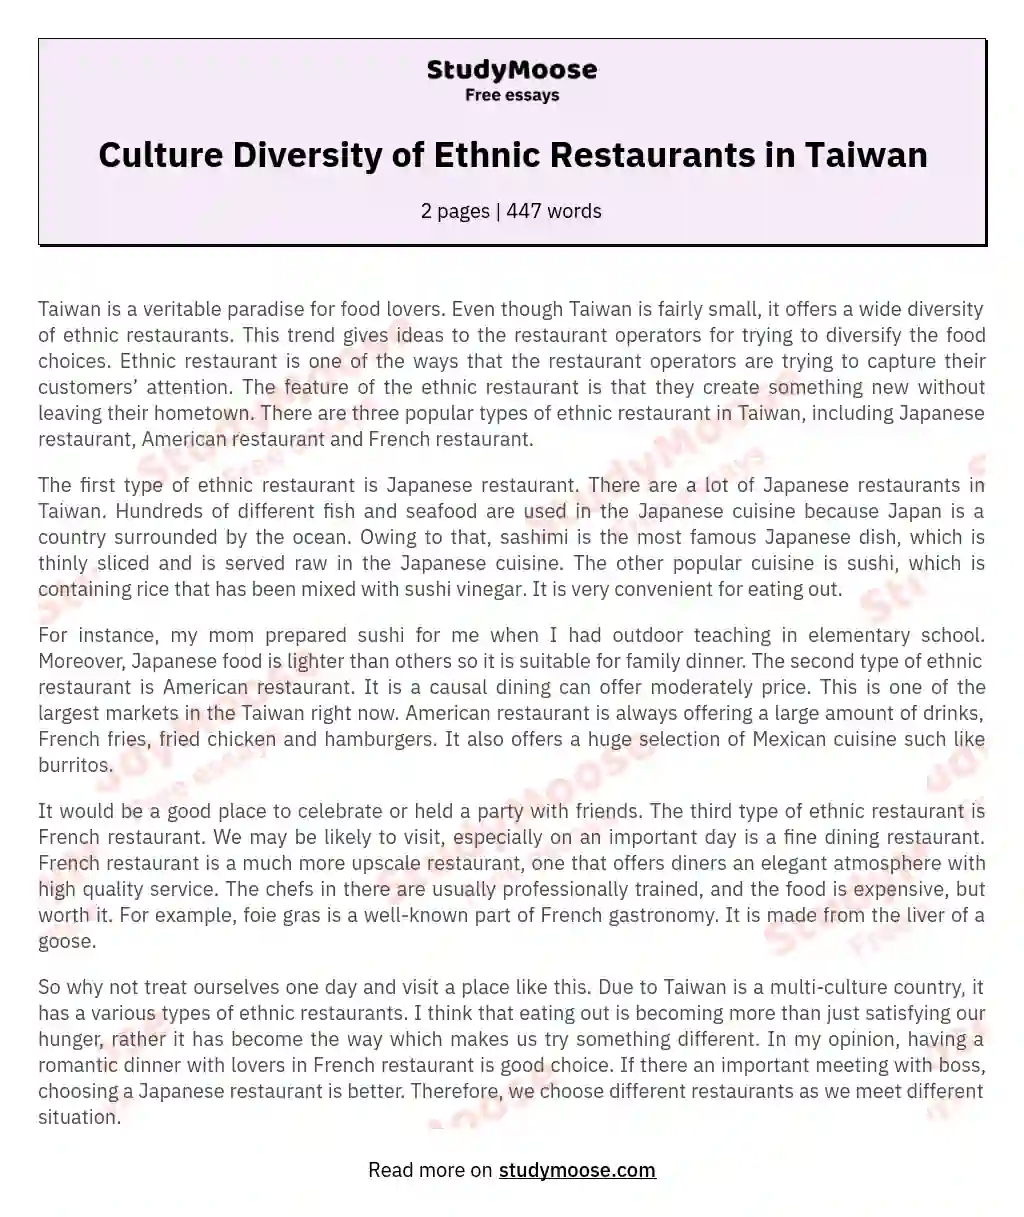 Culture Diversity of Ethnic Restaurants in Taiwan essay